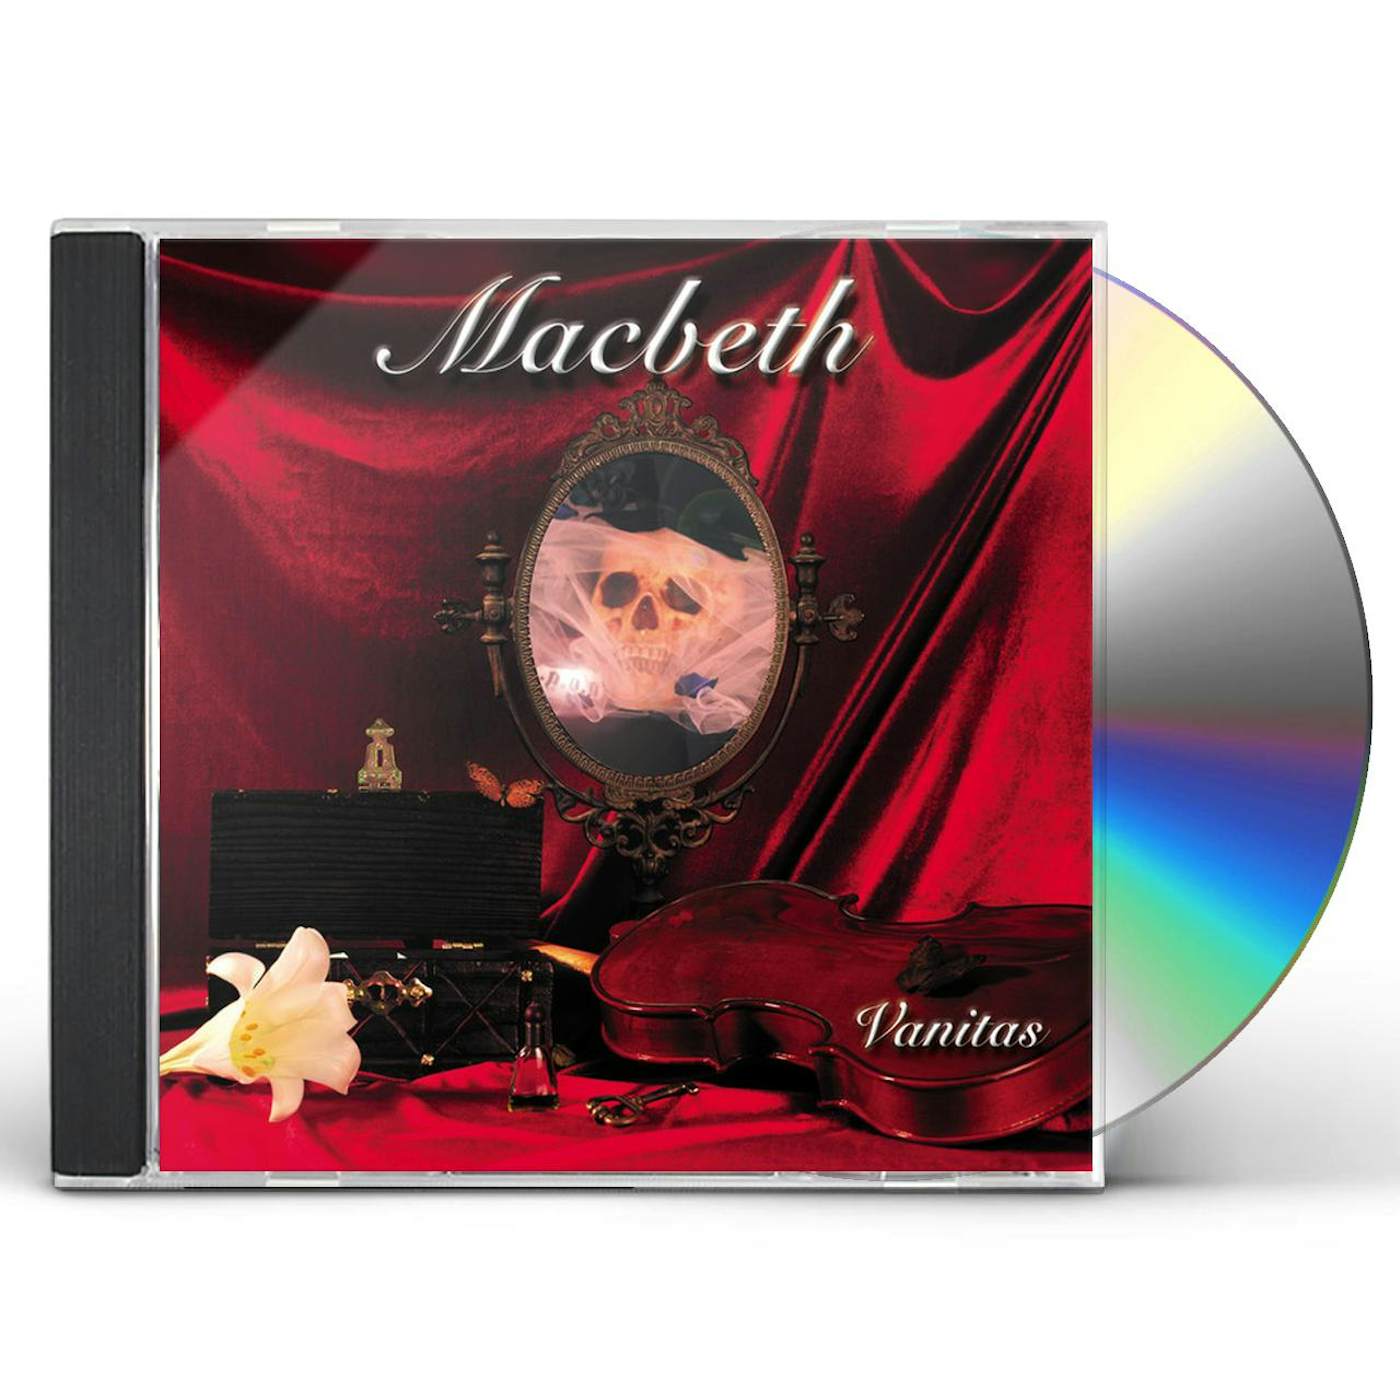 Macbeth VANITAS CD